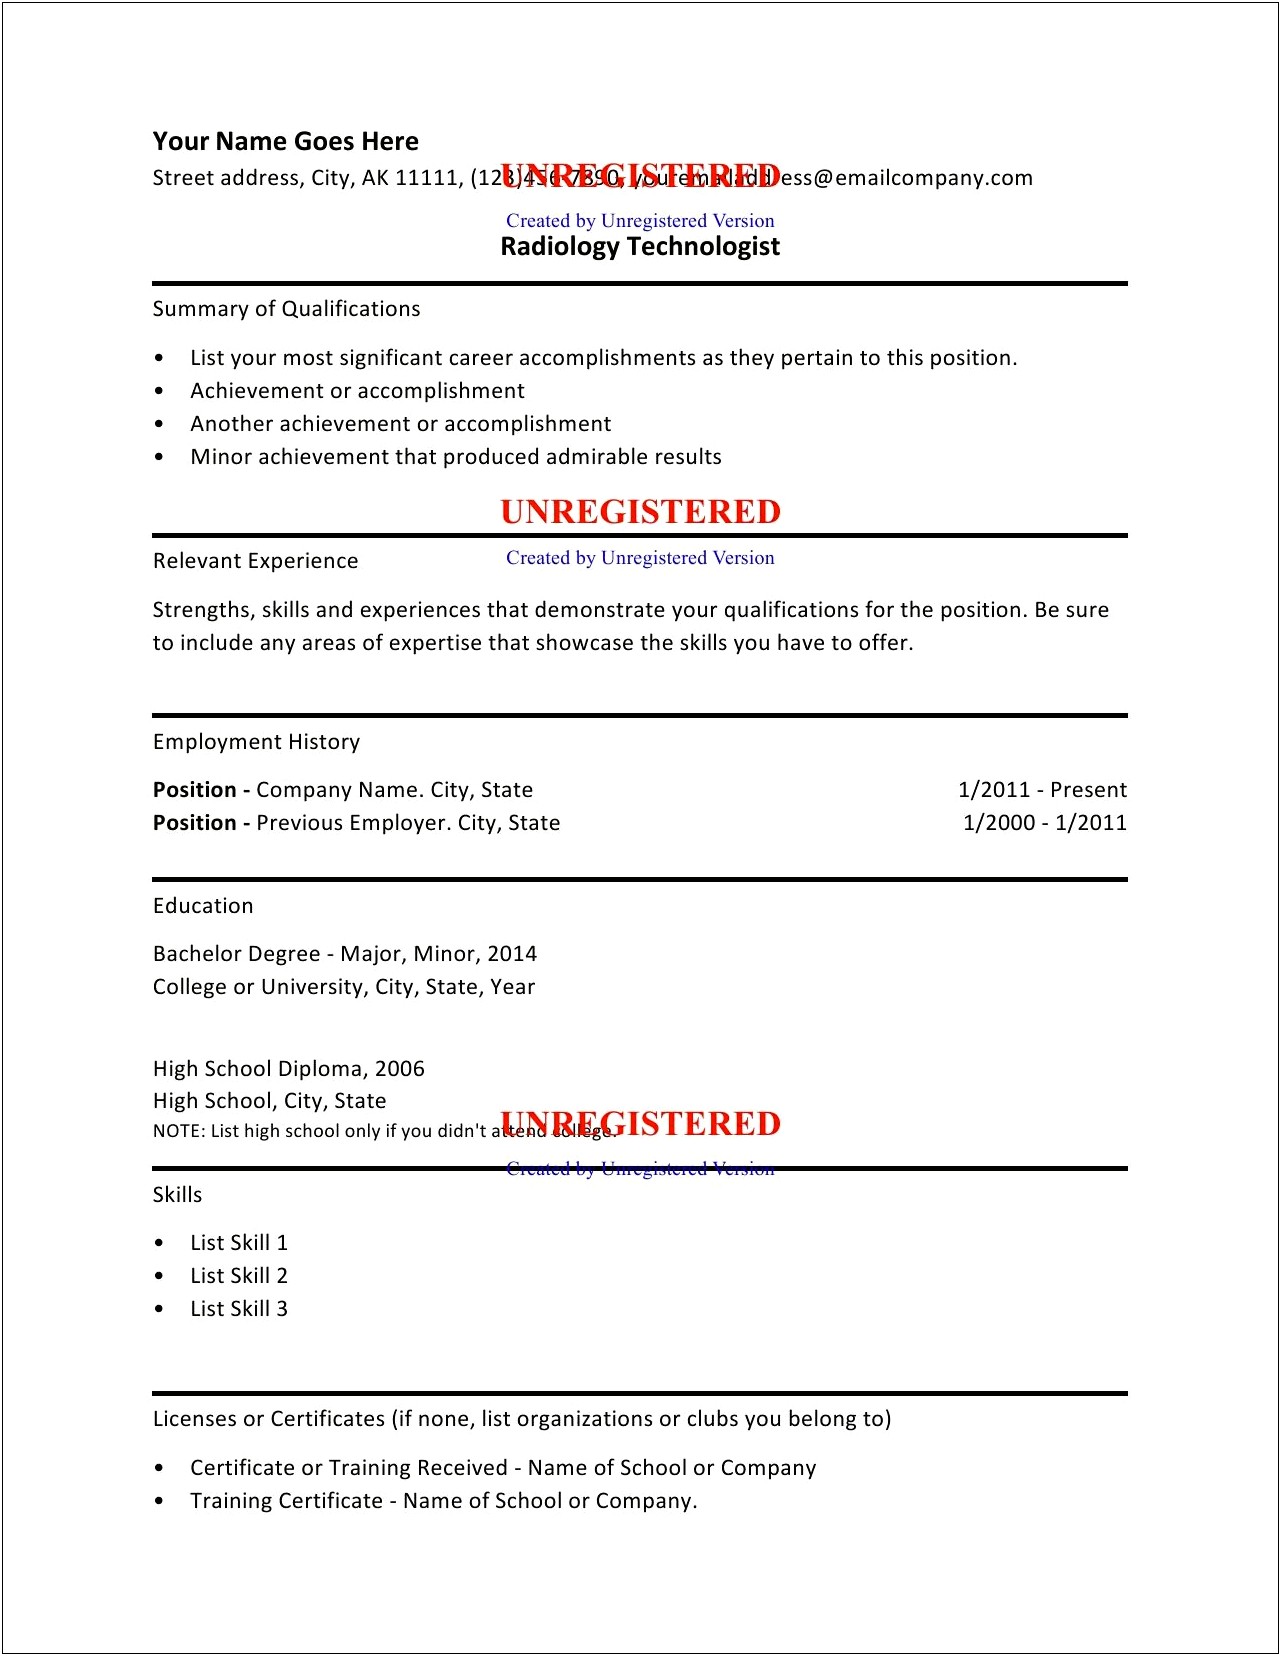 Sample Resume For Radiologic Technologist